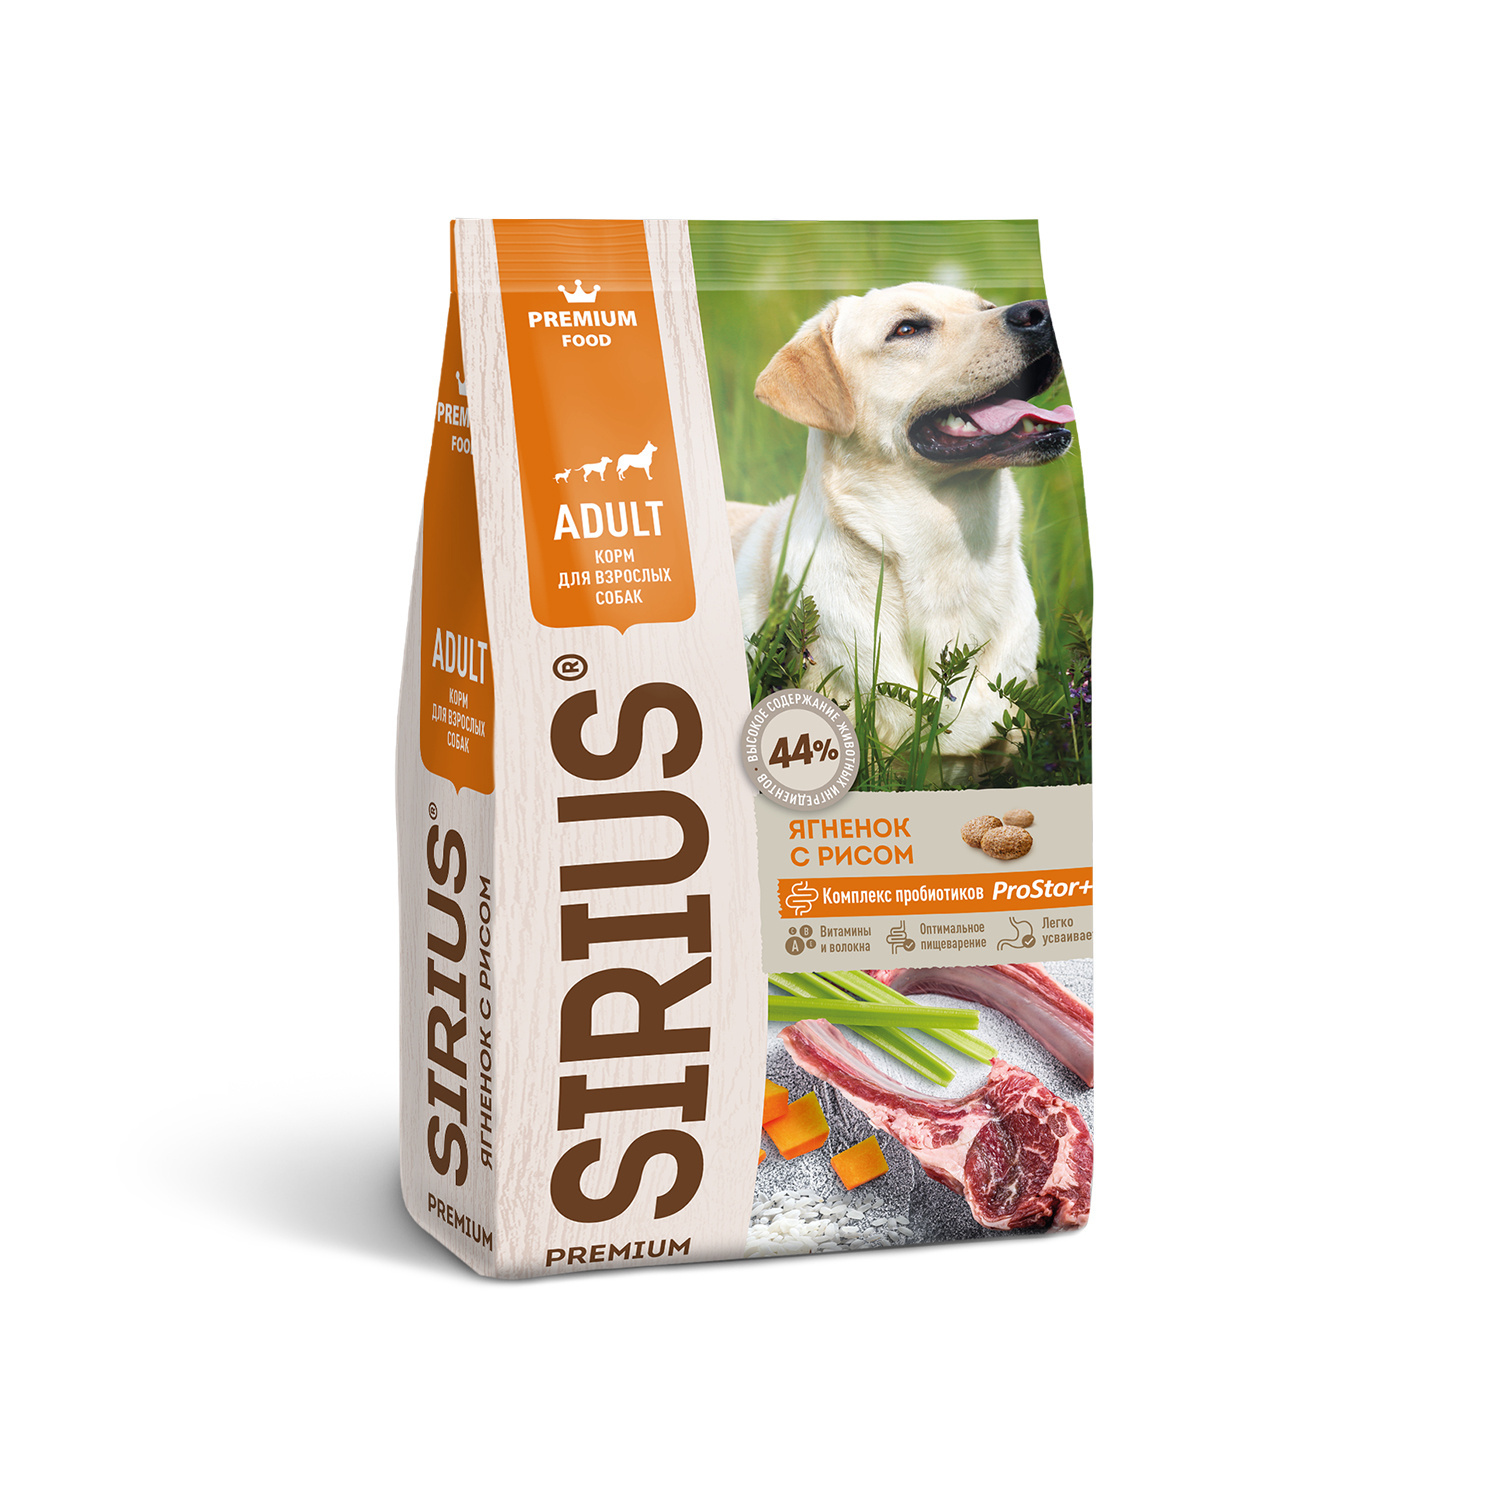 Sirius Sirius сухой корм для собак, ягненок и рис (15 кг) sirius sirius сухой корм для собак говядина с овощами 15 кг